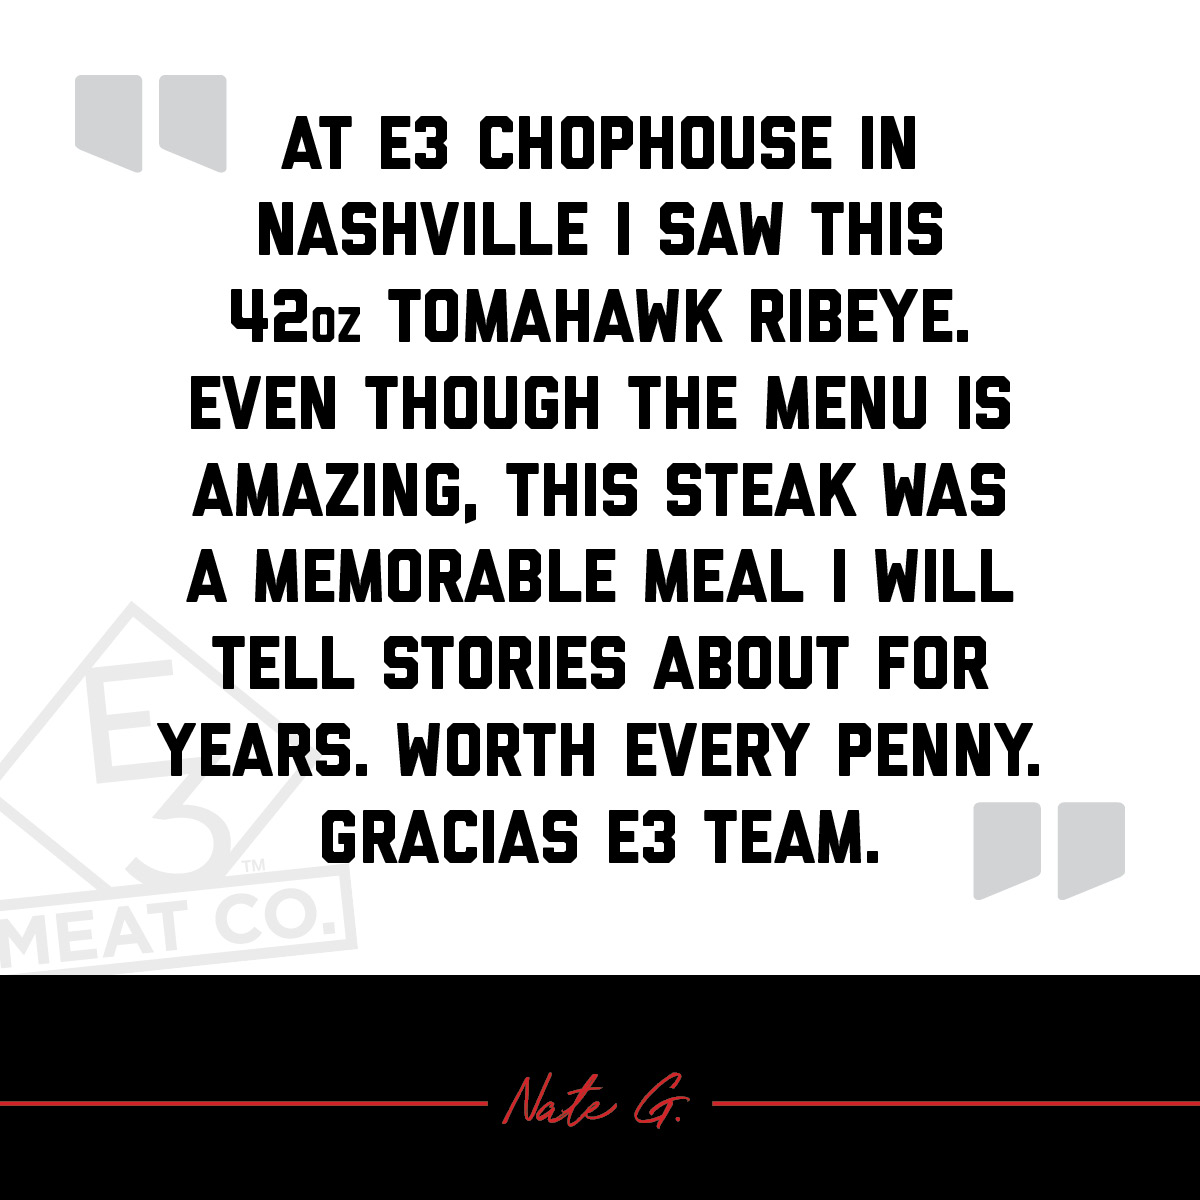 Nashville friends, have you tried E3 Chophouse Nashville yet? Love the steak? Order online to enjoy at home! 

#e3meatco #e3ranch #southeastkansas #morethanasteak #responsiblyraised #e3chophousenashville #fivestars